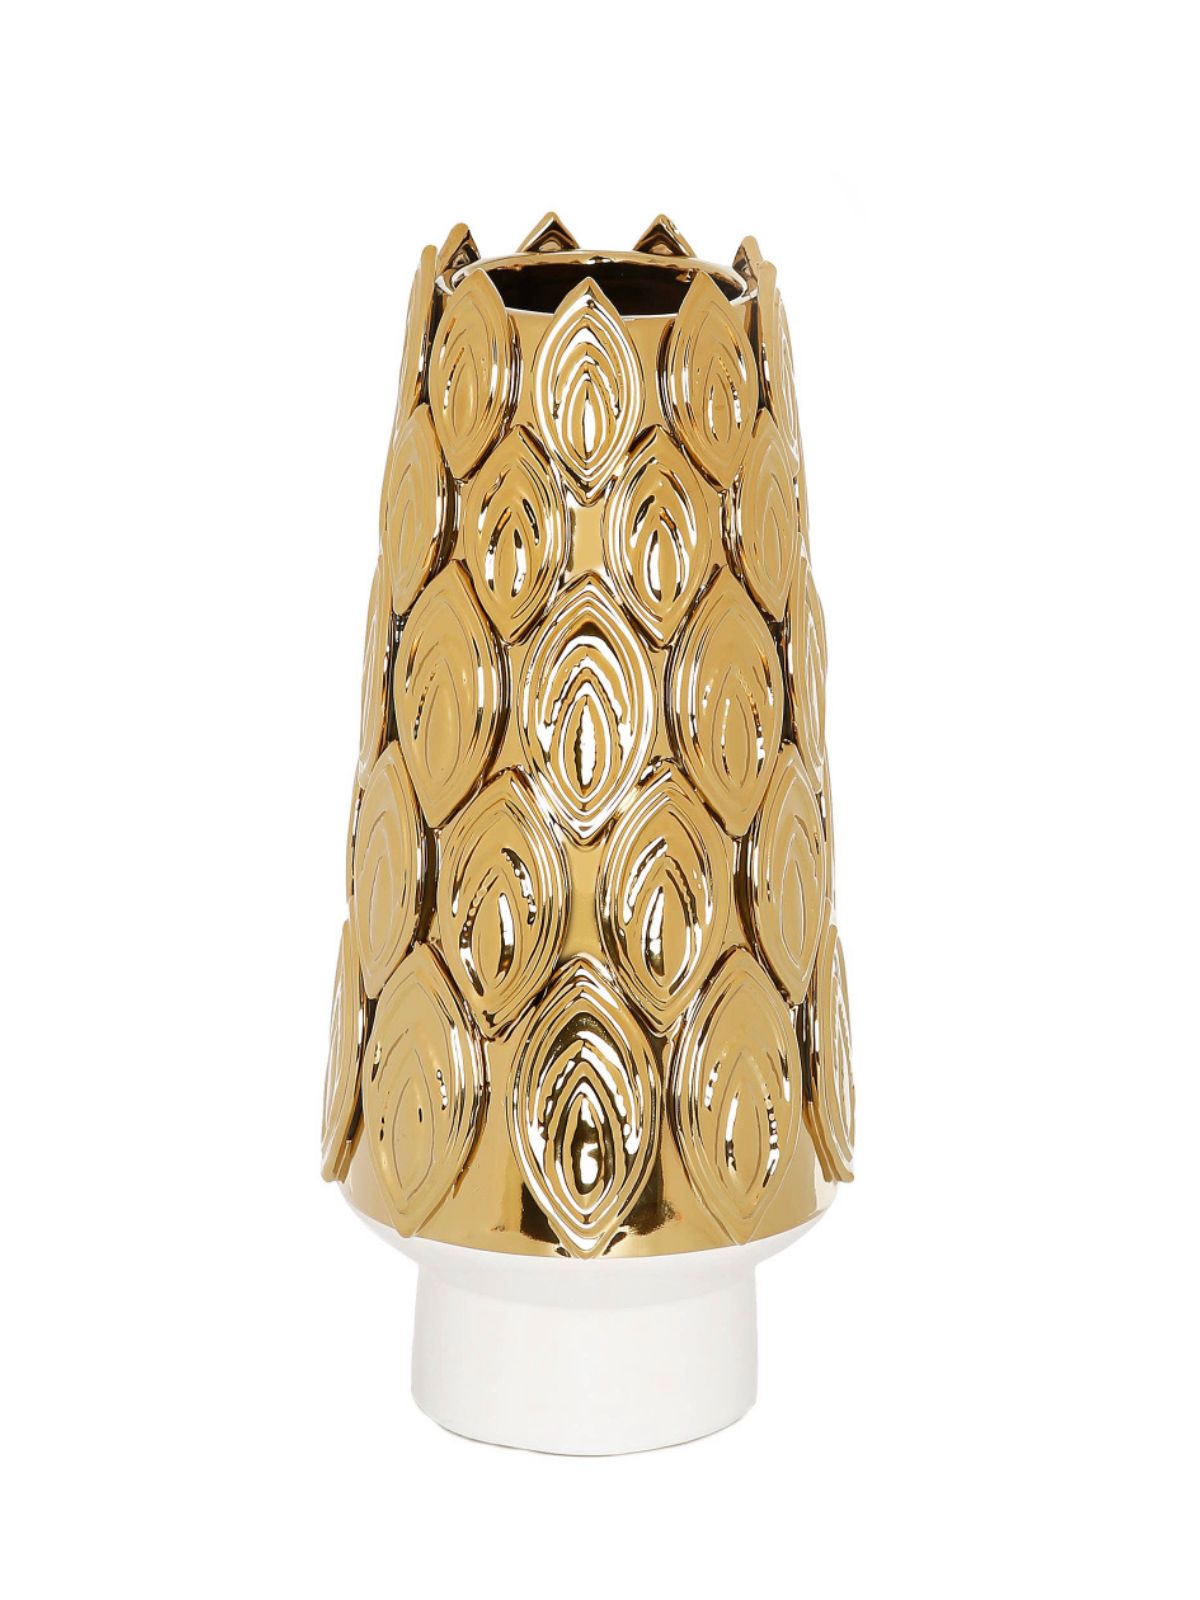 15H Luxury White Porcelain Decorative Vase With Handmade Carved Gold Petal Design - KYA Home Decor